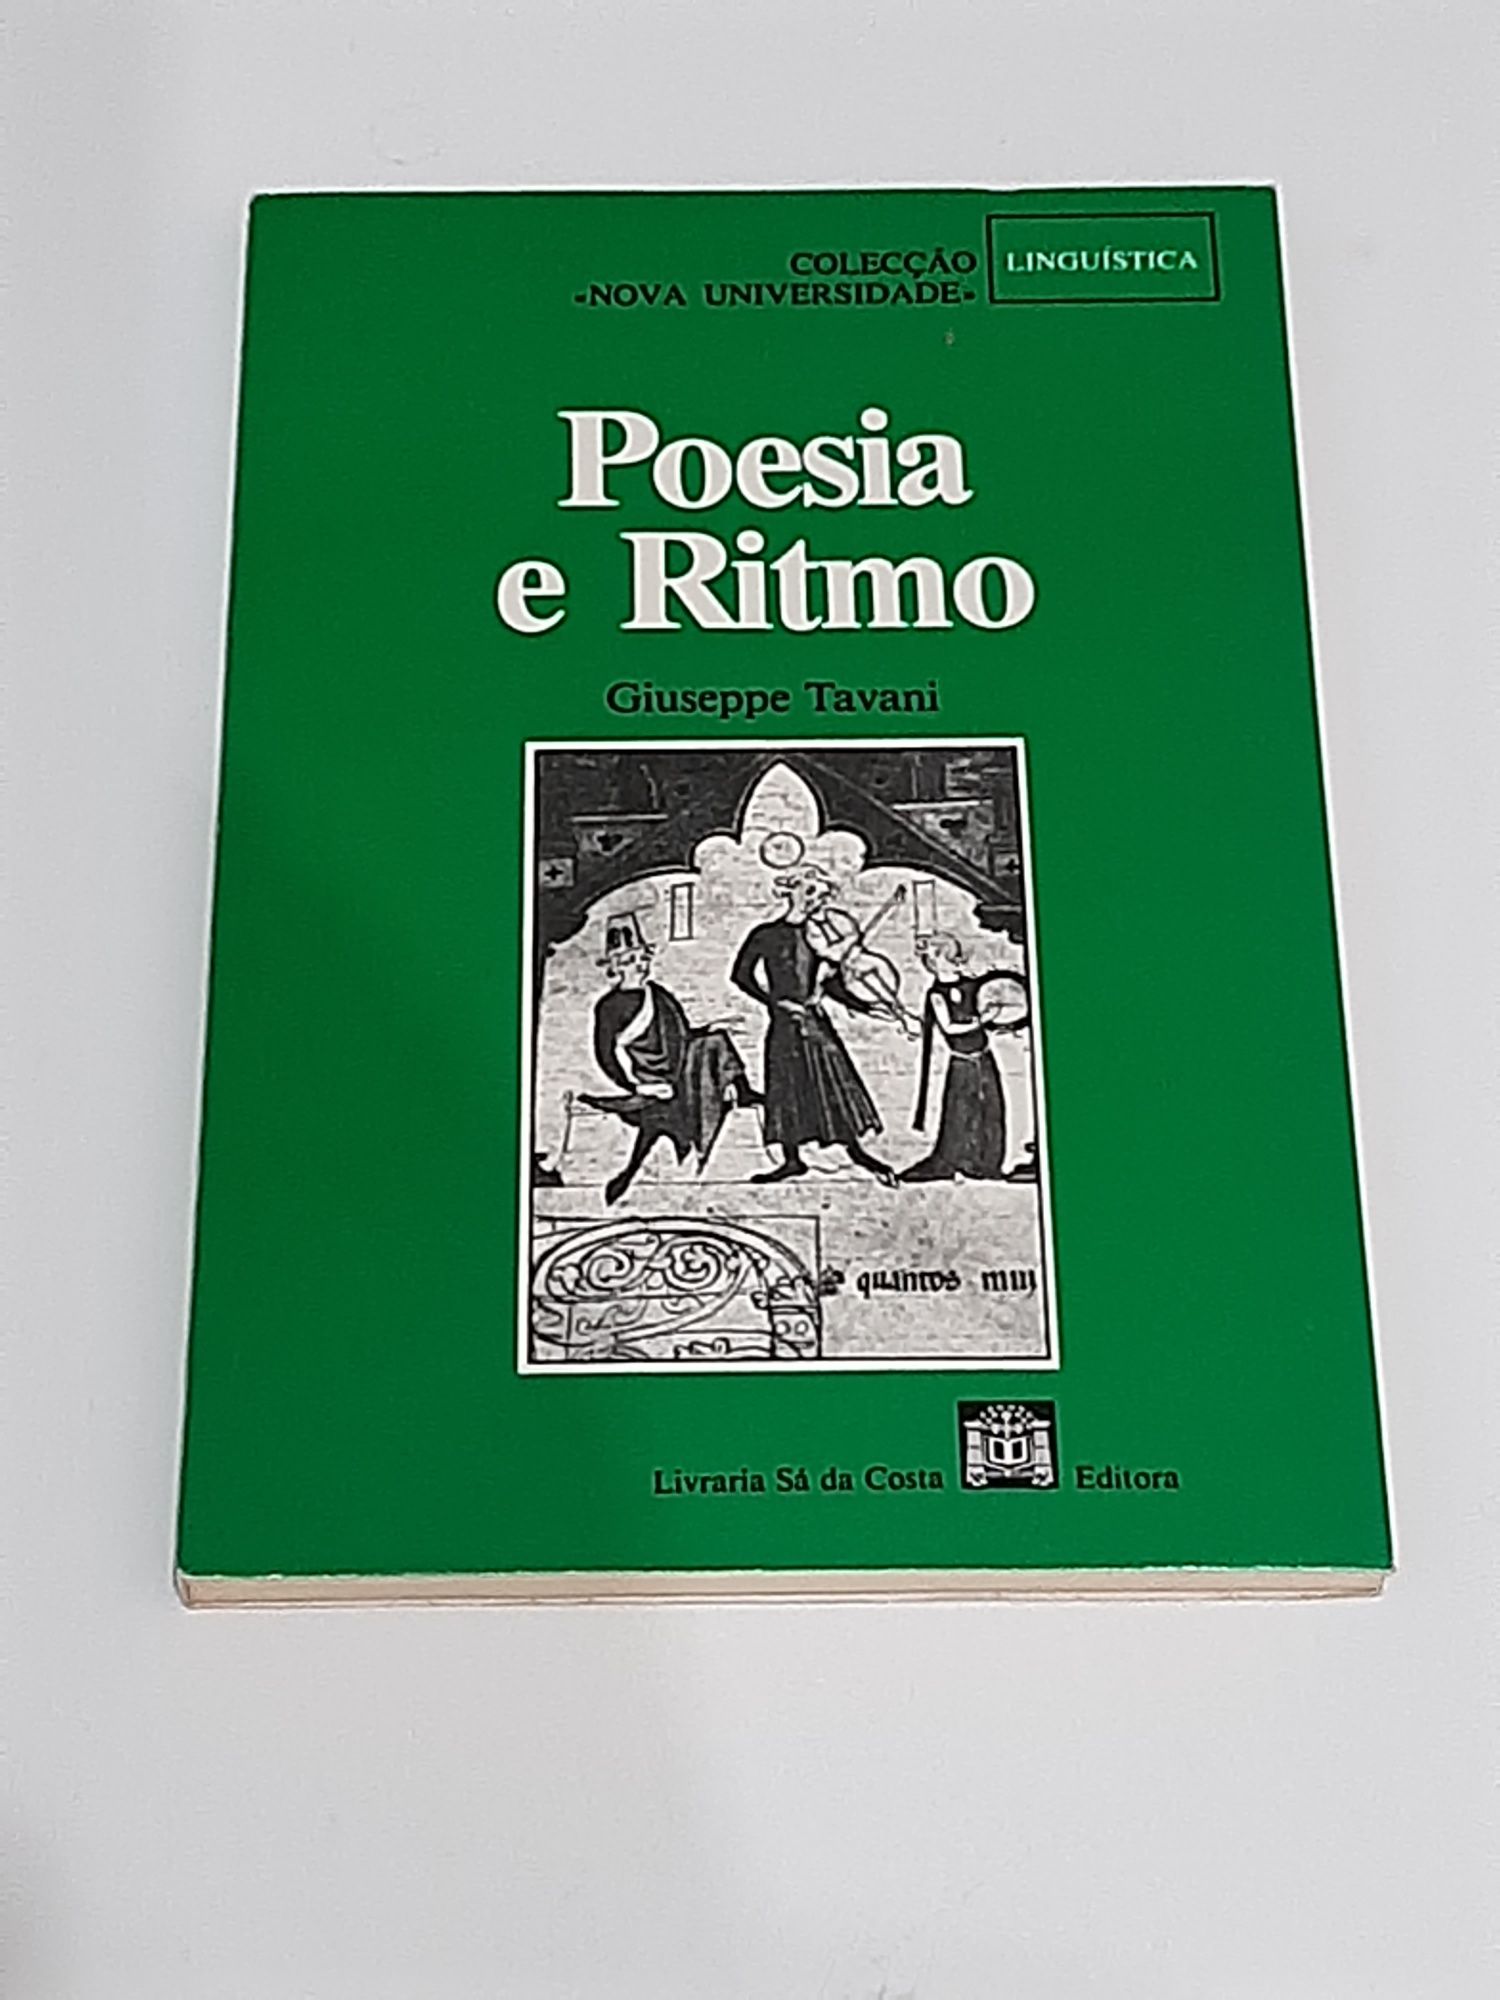 Giuseppe Tavani - Poesia e Ritmo - Portes Gratuitos